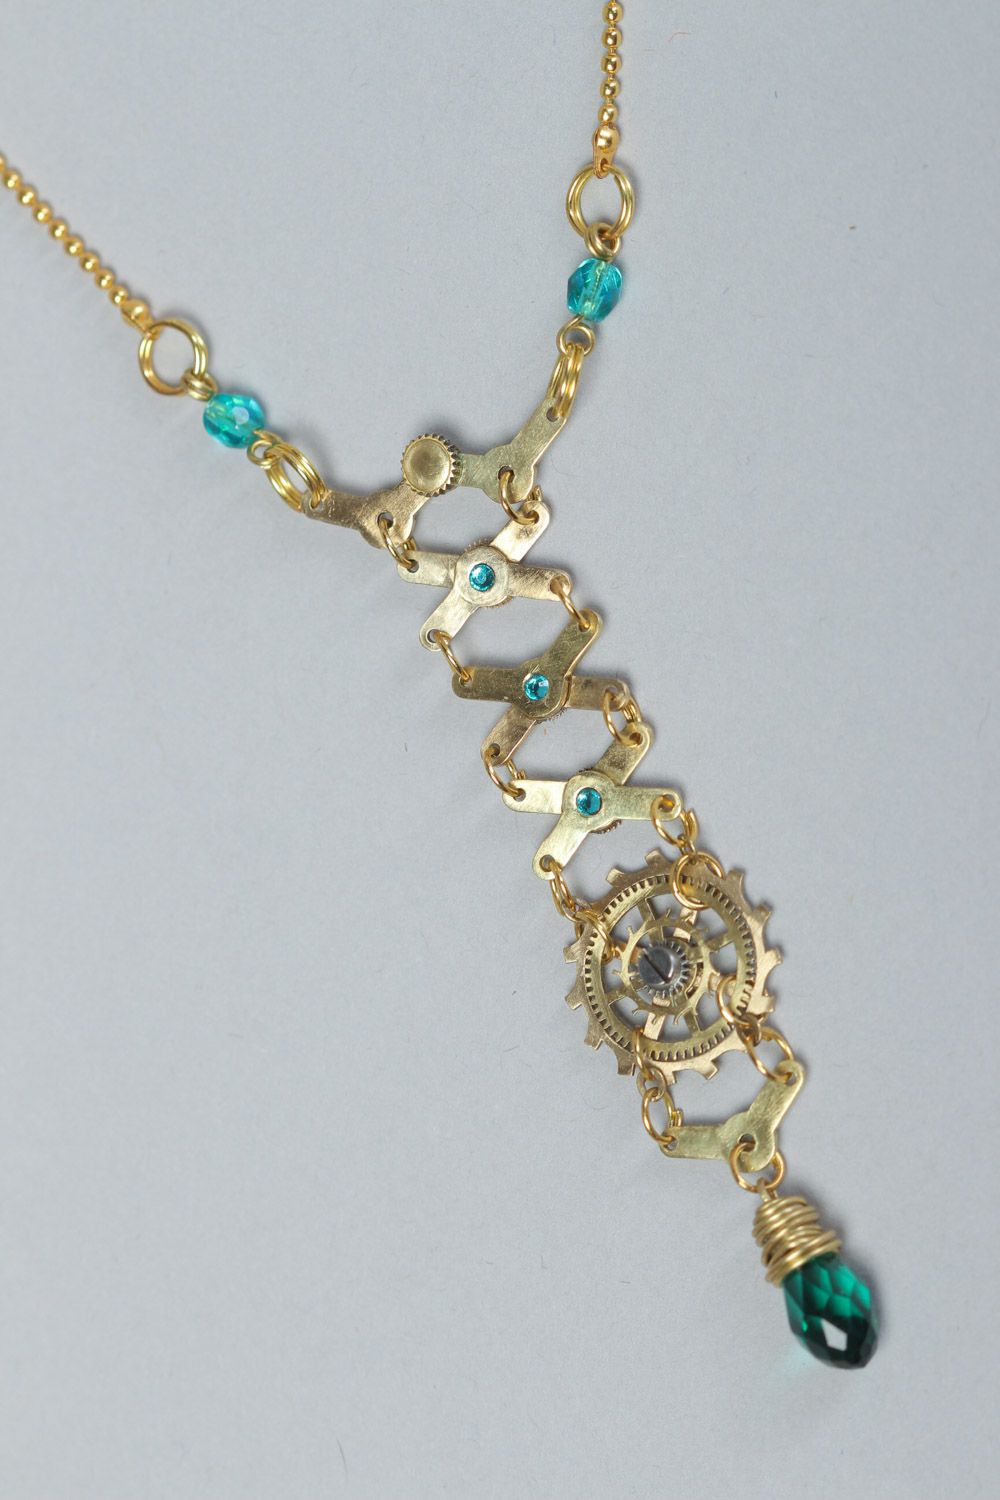 Joli pendentif fait main avec cristaux turquoise style steampunk bijou photo 2